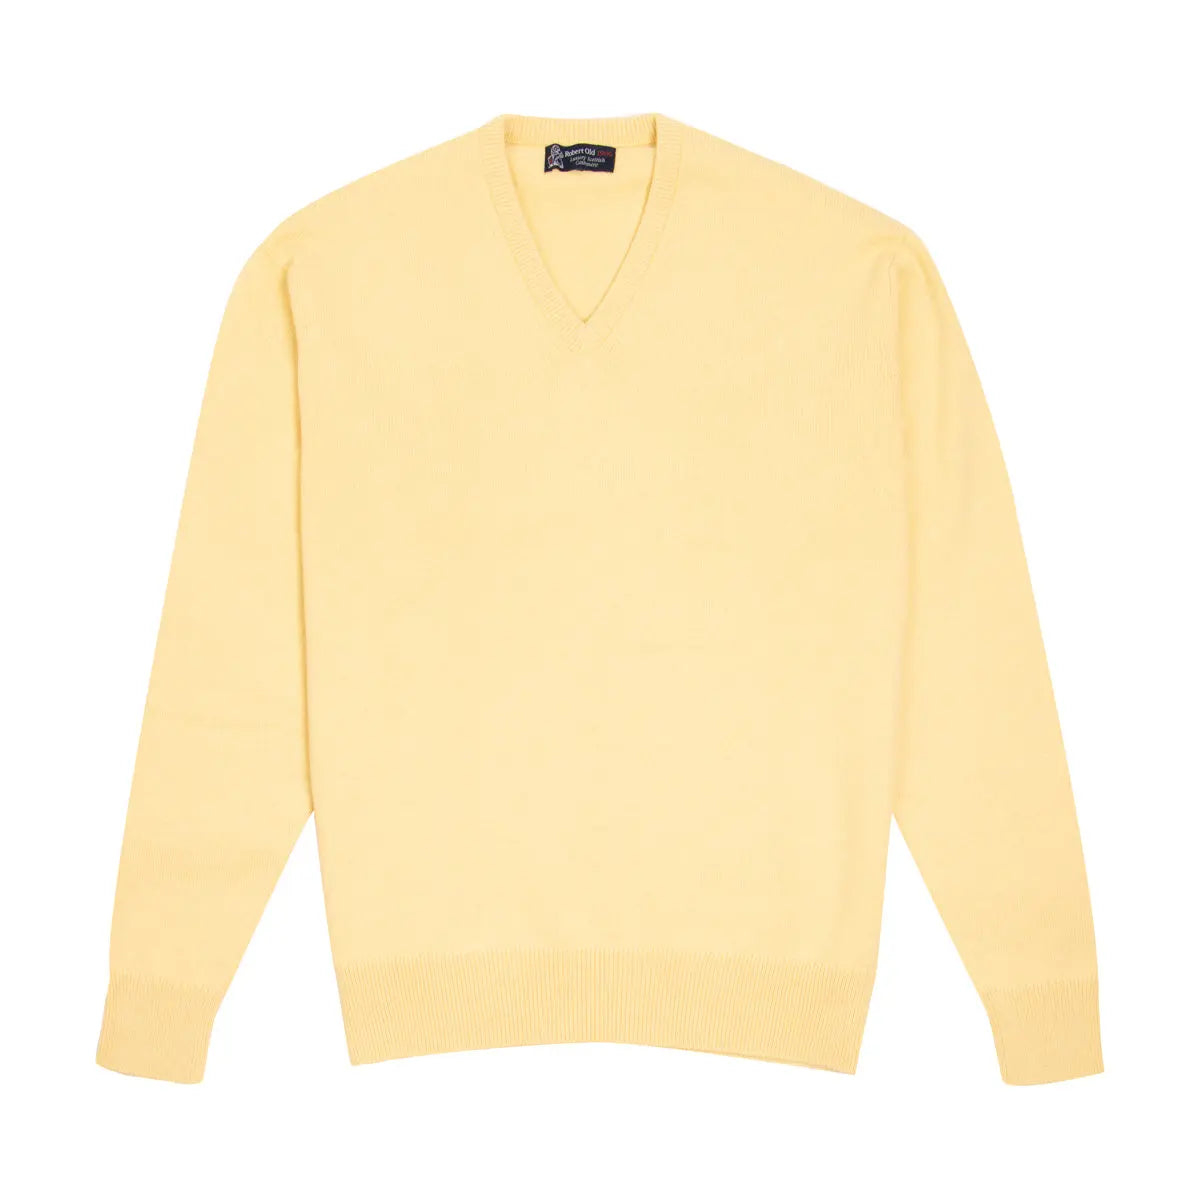 Lemon Frost Tobermorey 4ply V-Neck Cashmere Sweater Robert Old